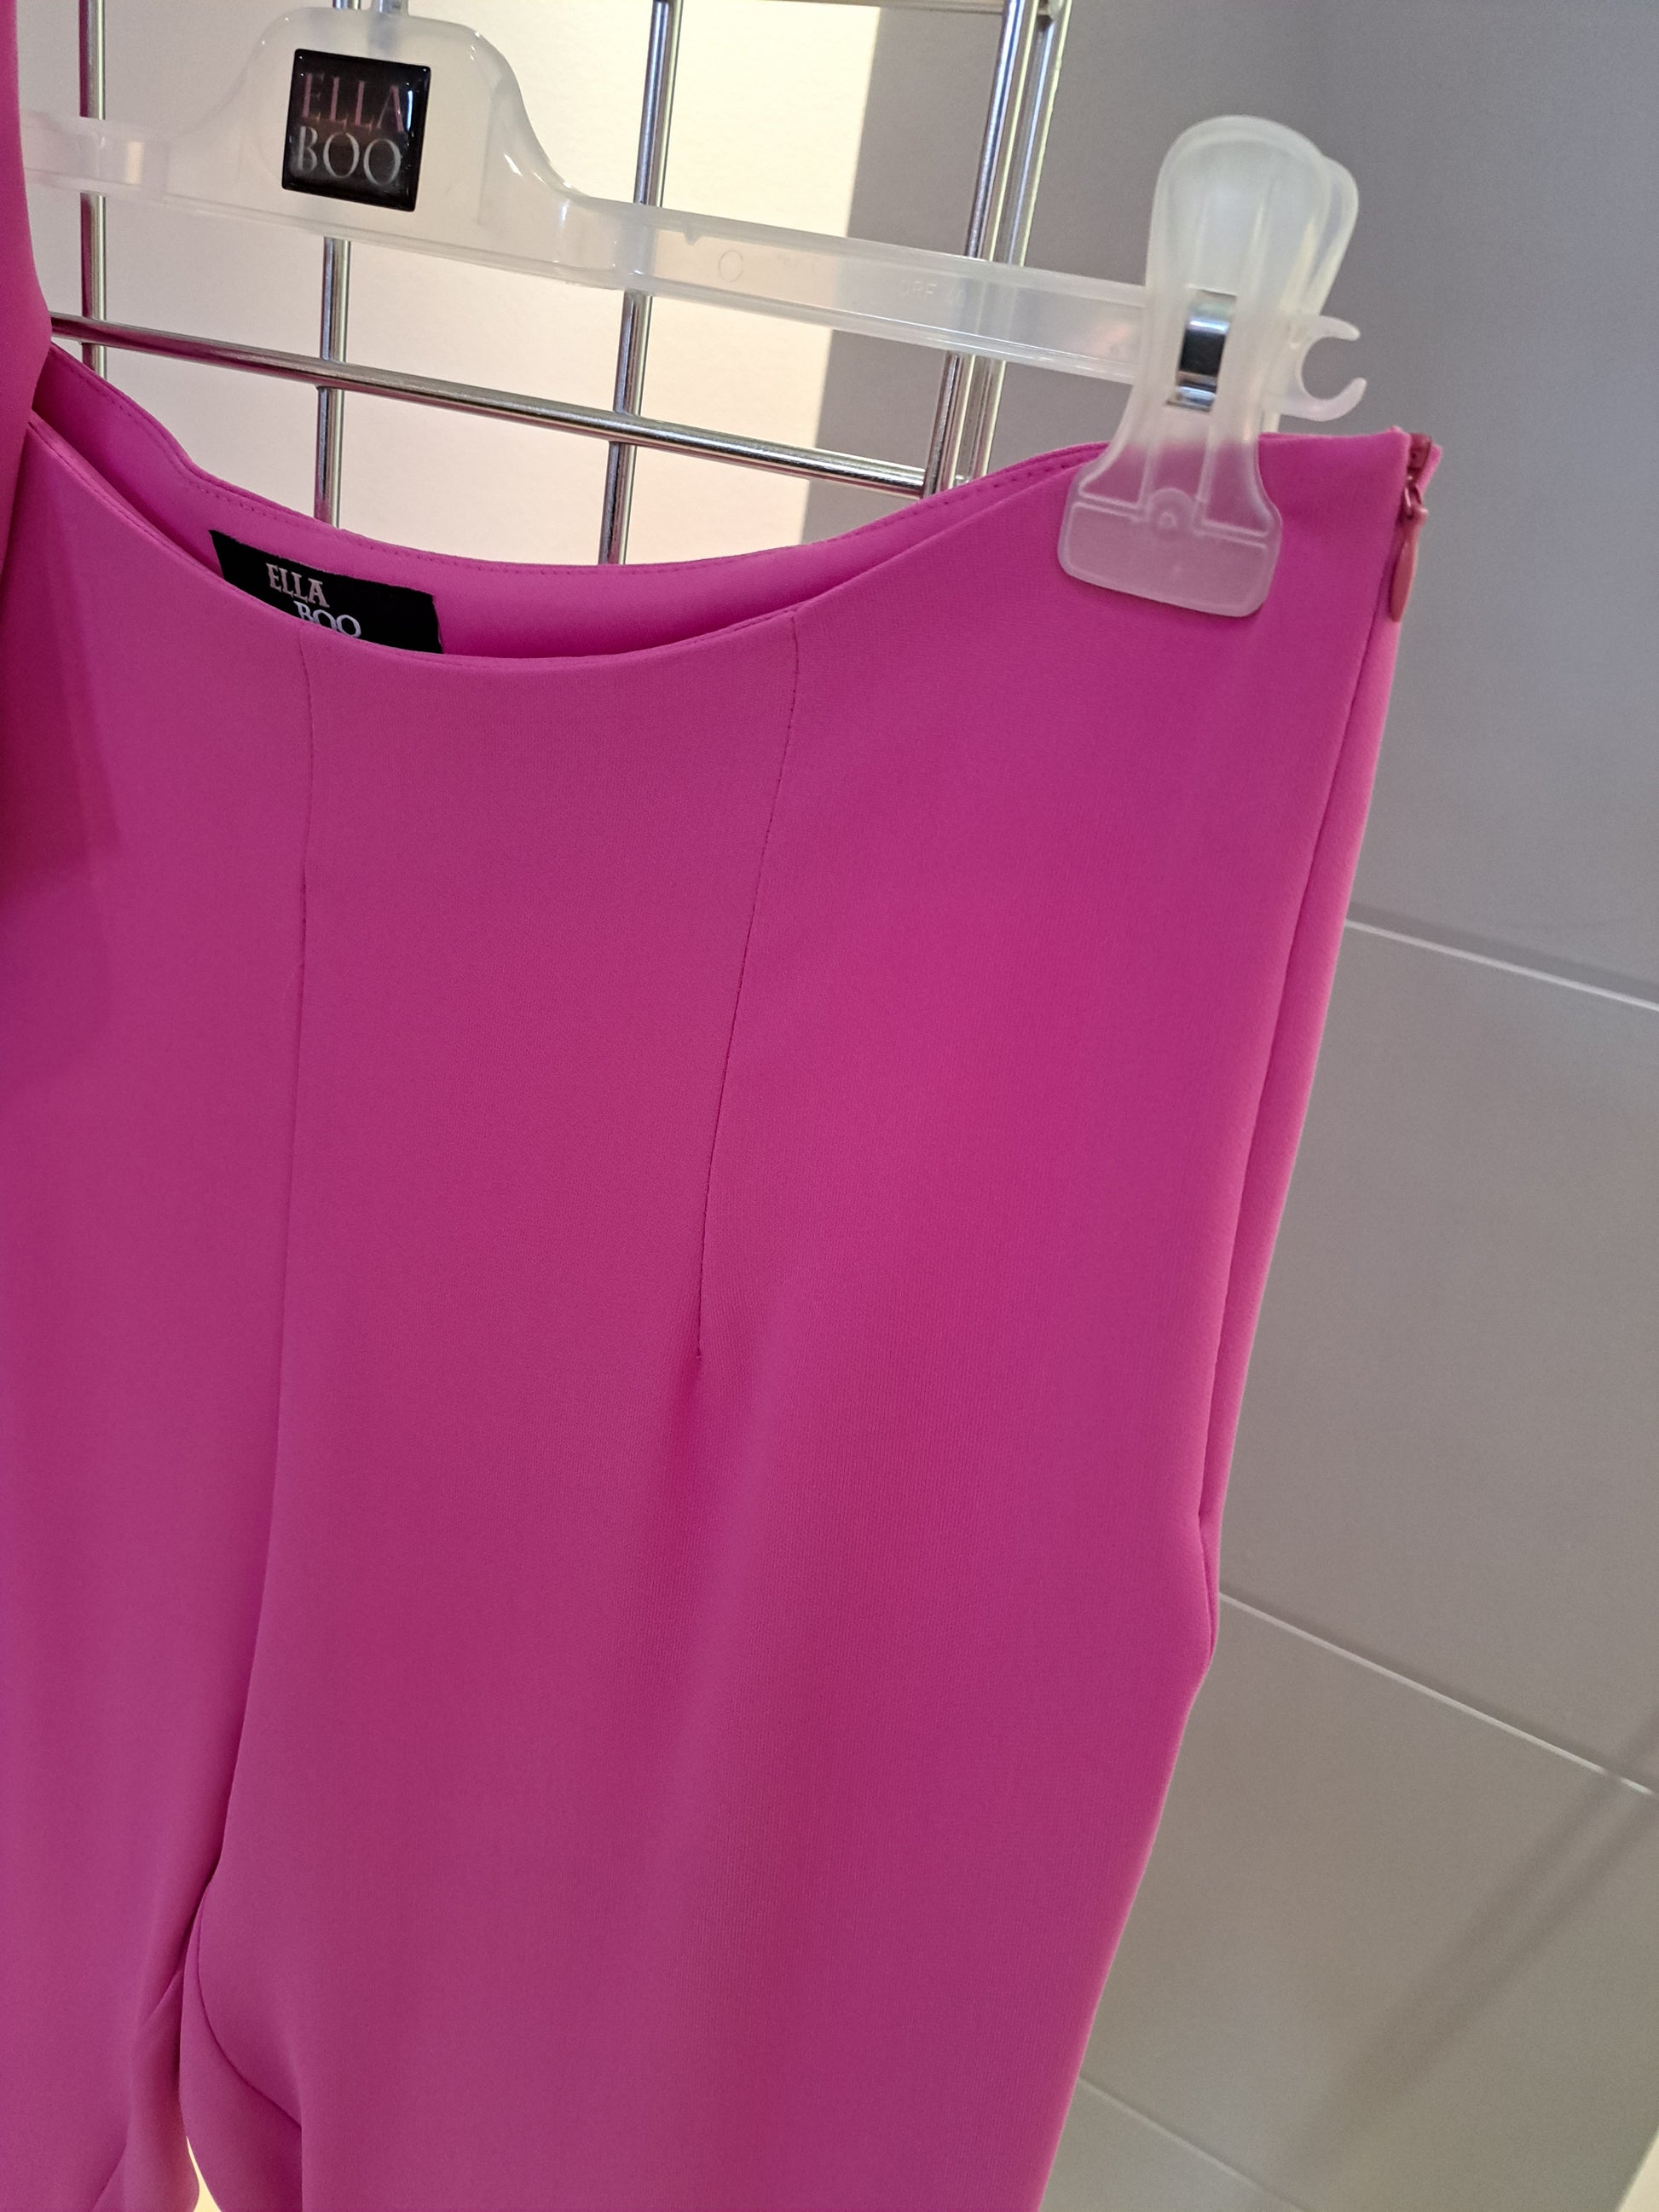 Hot pink 2 piece outfit - Maya Maya Ltd